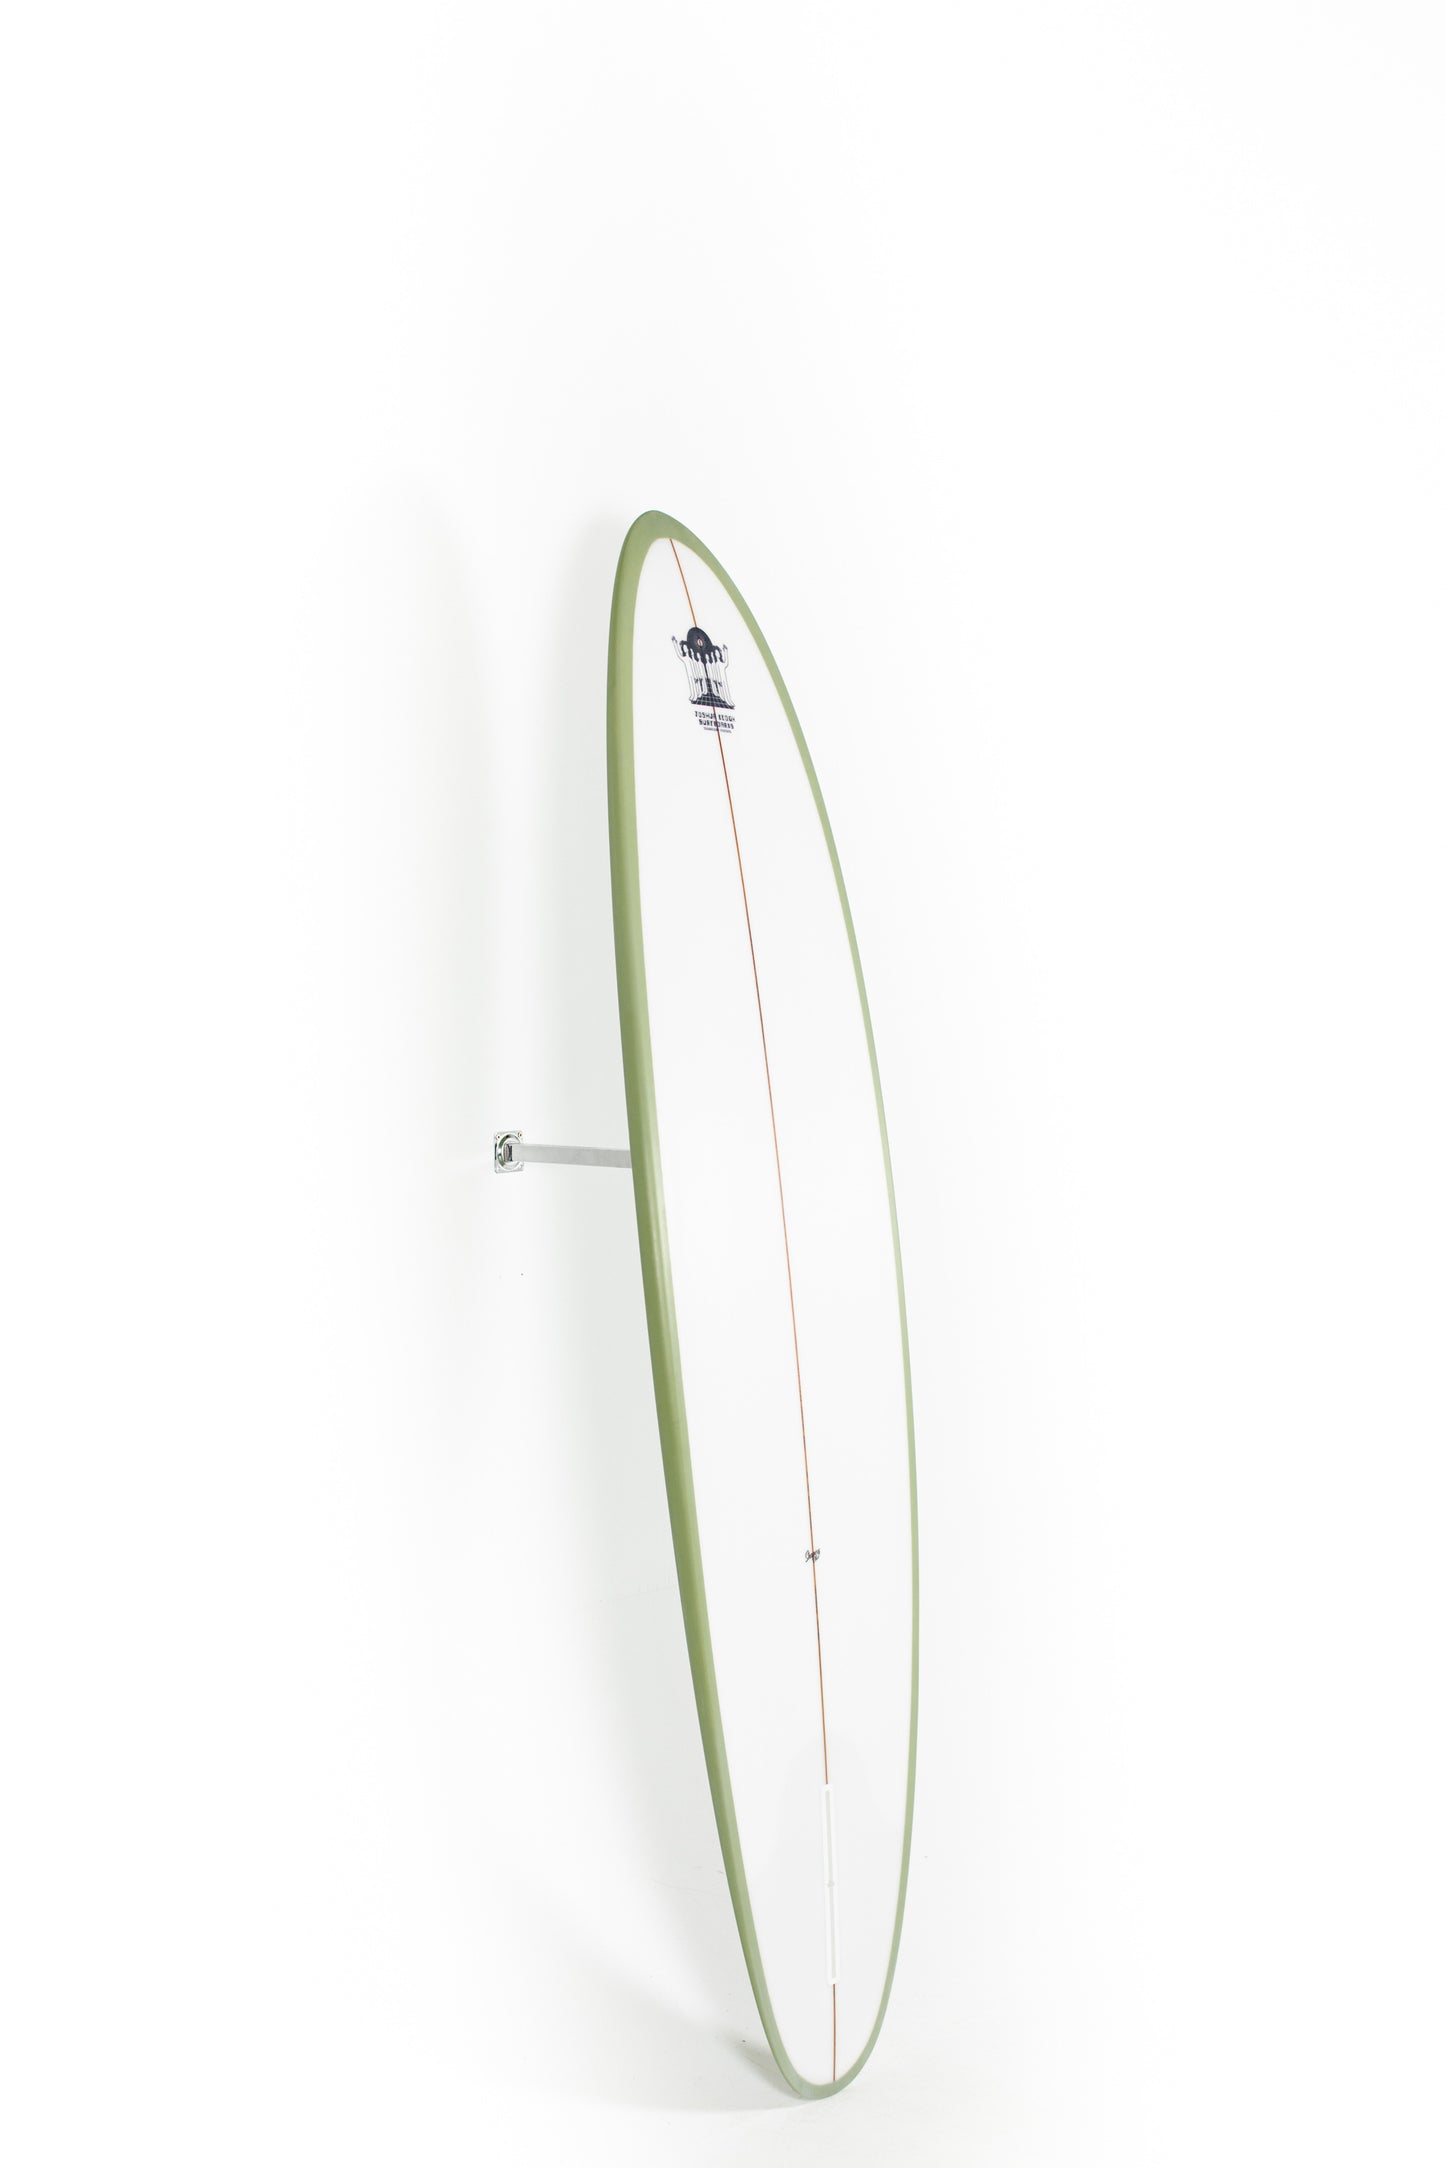 
                  
                    Pukas Surf Shop_Joshua Keogh Surfboard - LIBERATOR SINGLE by Joshua Keogh - 7'2" x 21 1/2 x 2 11/16 - LIBERATORS72
                  
                